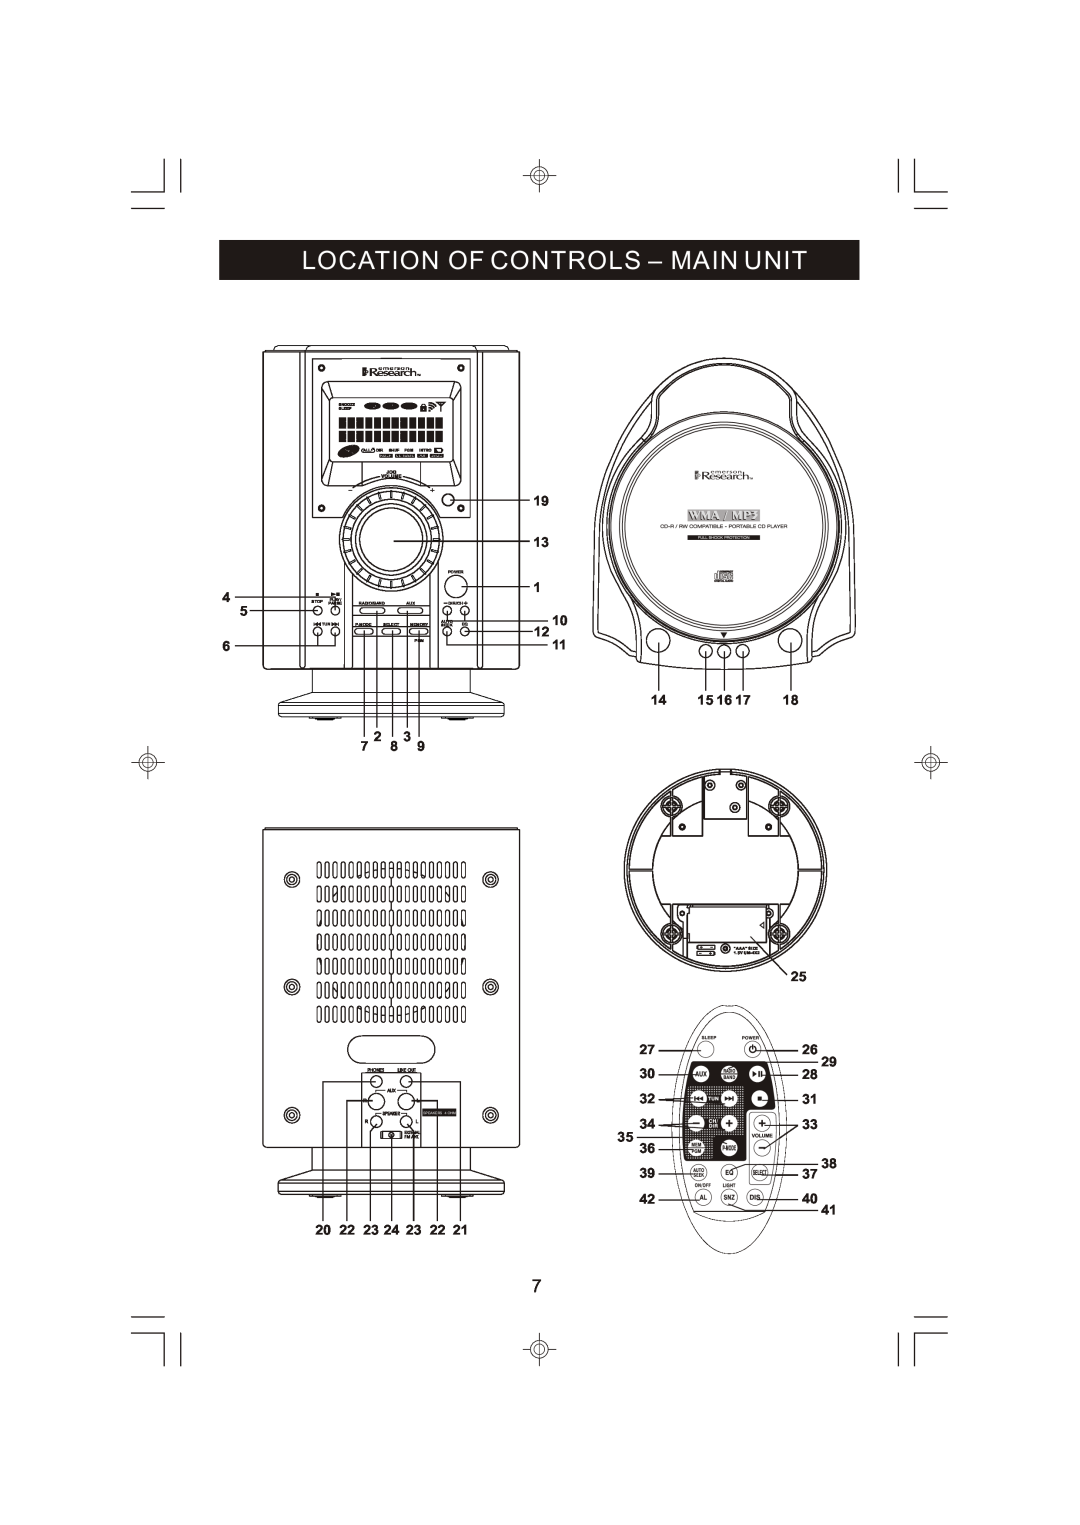 Emerson ES398 owner manual Location Of Controls - Main Unit, 18 25 26 29 28 31 33 38 